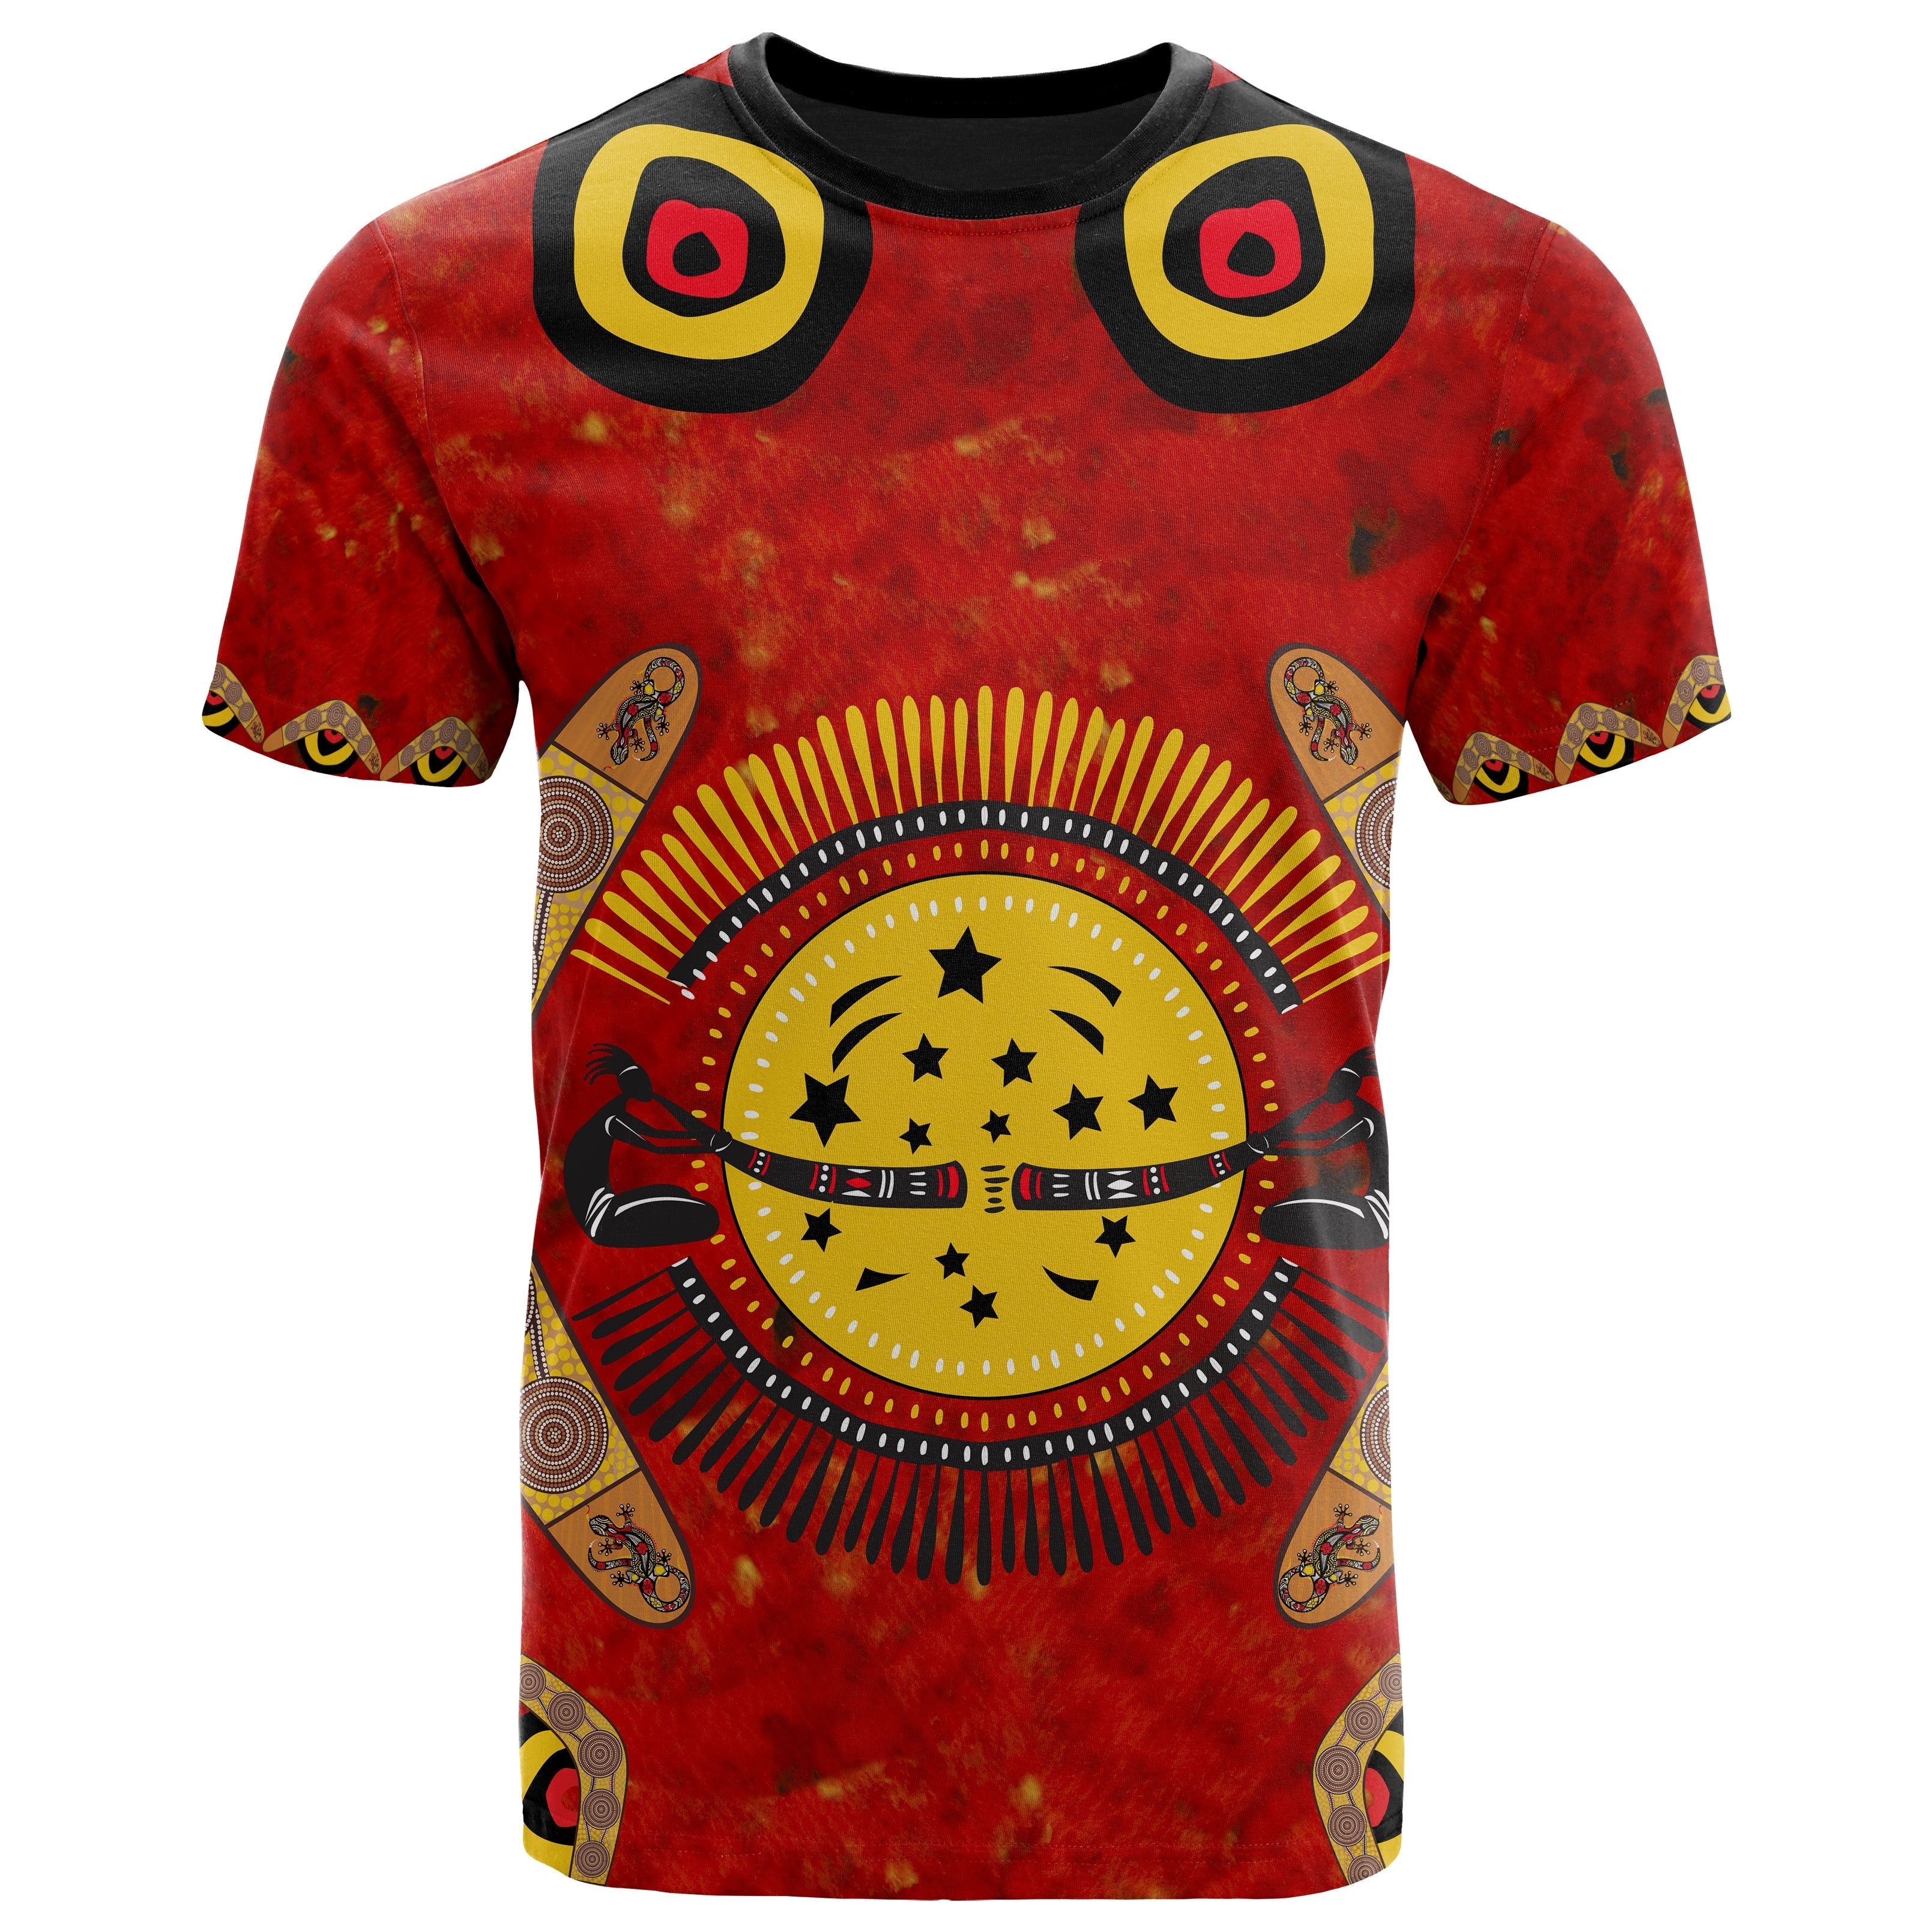 aboriginal-t-shirt-lizard-and-boomerang-patterns